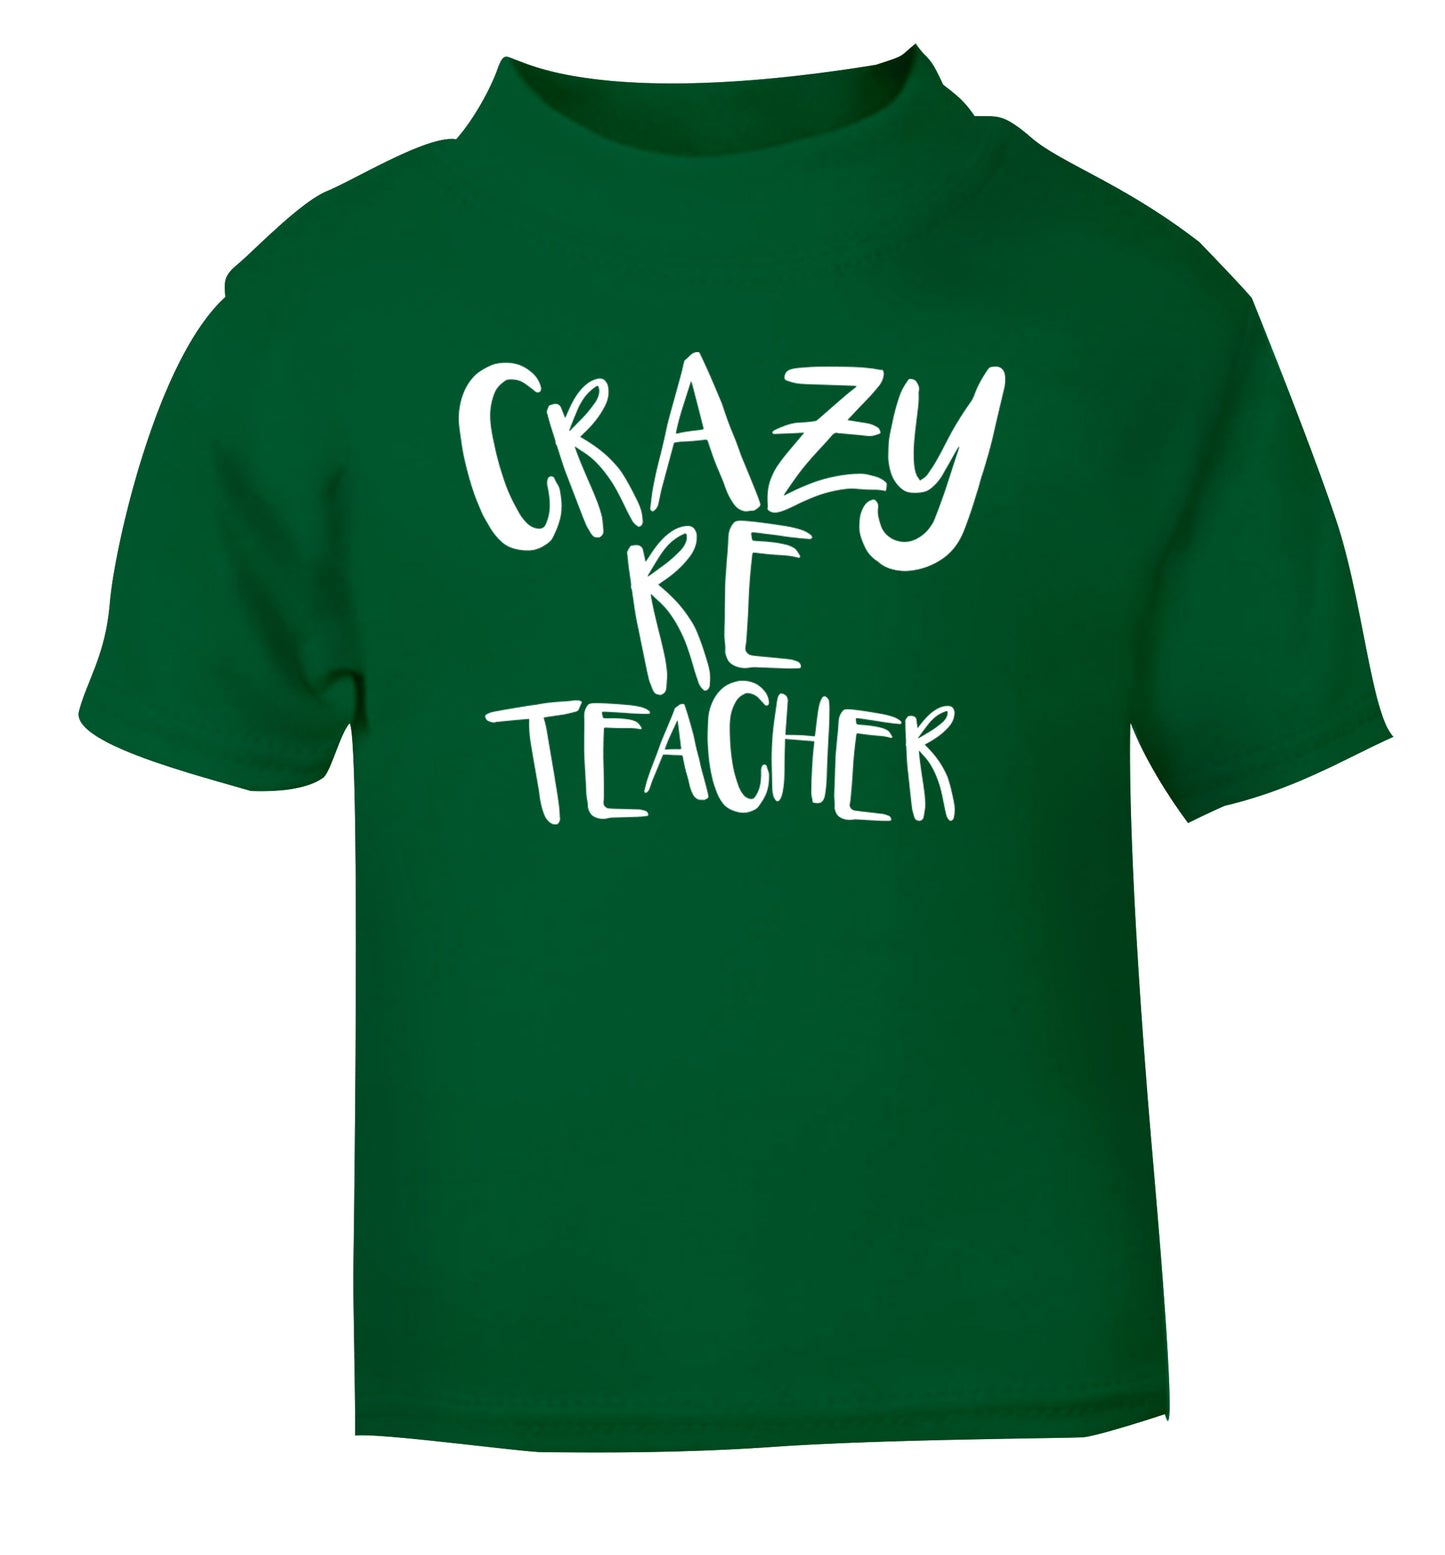 Crazy RE teacher green Baby Toddler Tshirt 2 Years